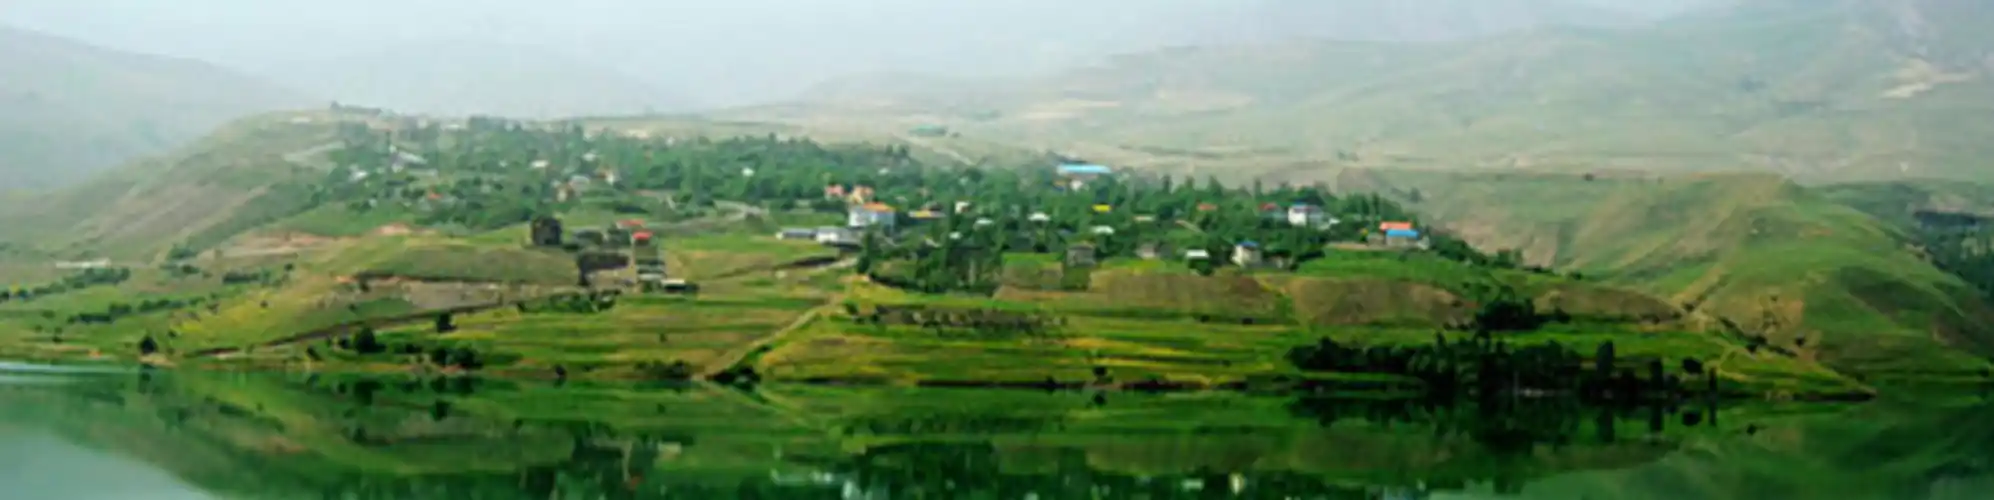 taleghan-city